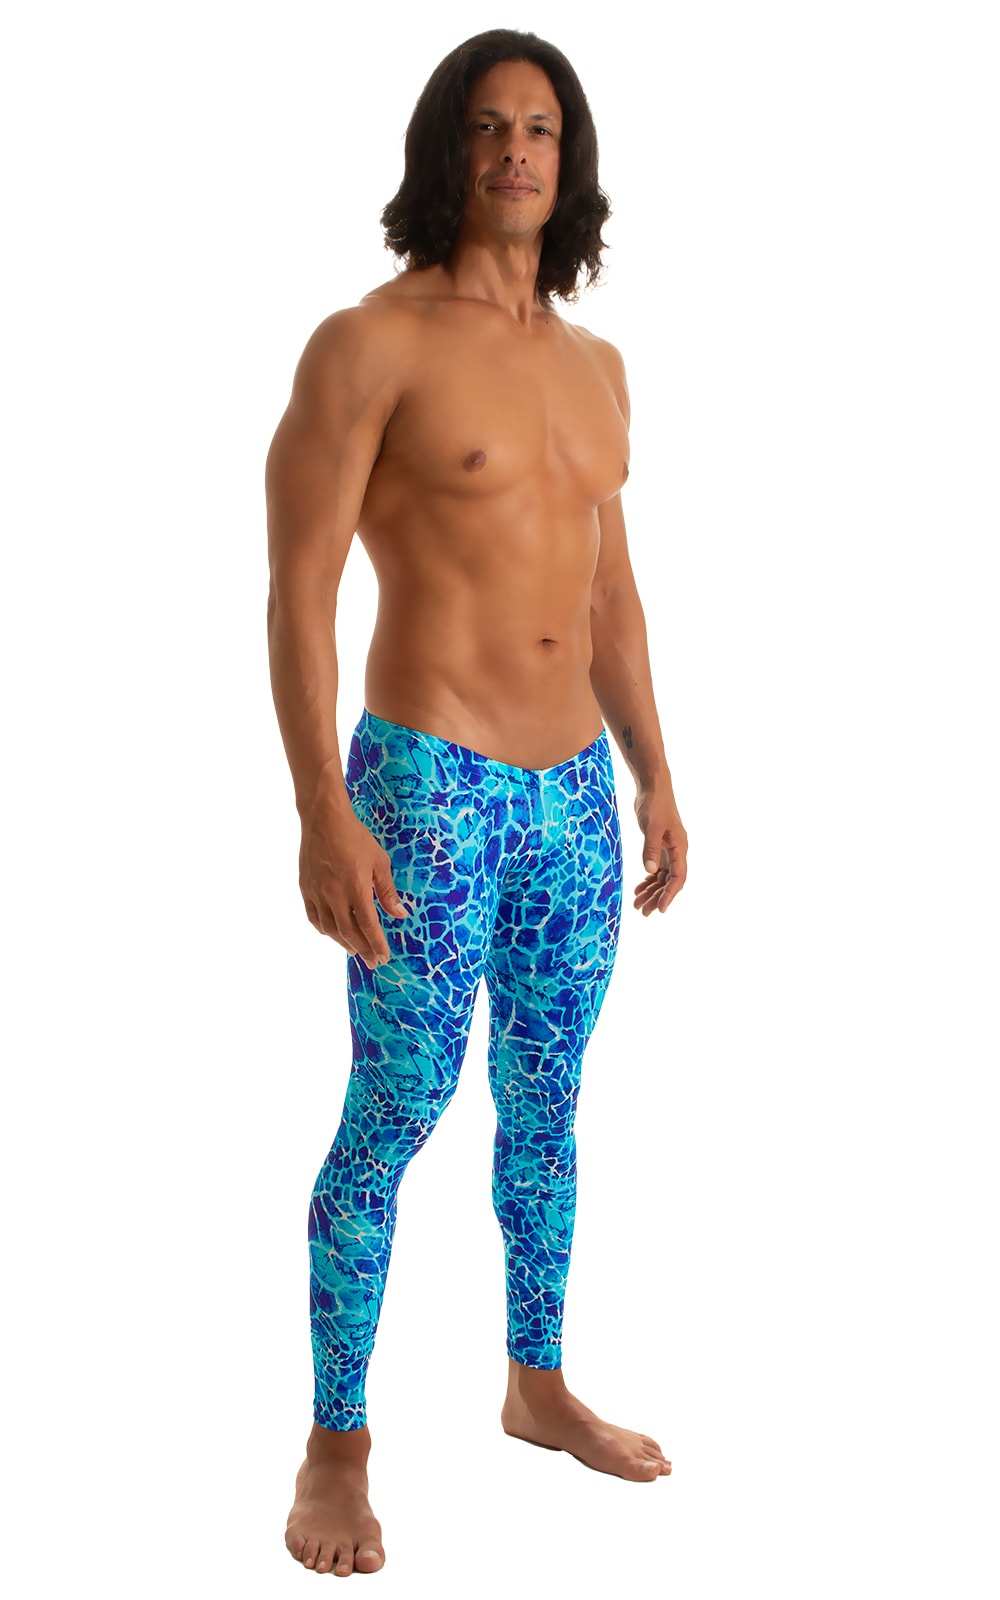 https://skinzwearphotography.com/prodLarge/mens-extreme-low-fashion-leggings-compression-designer-tights-world-blue-A19-9155-F2.jpeg